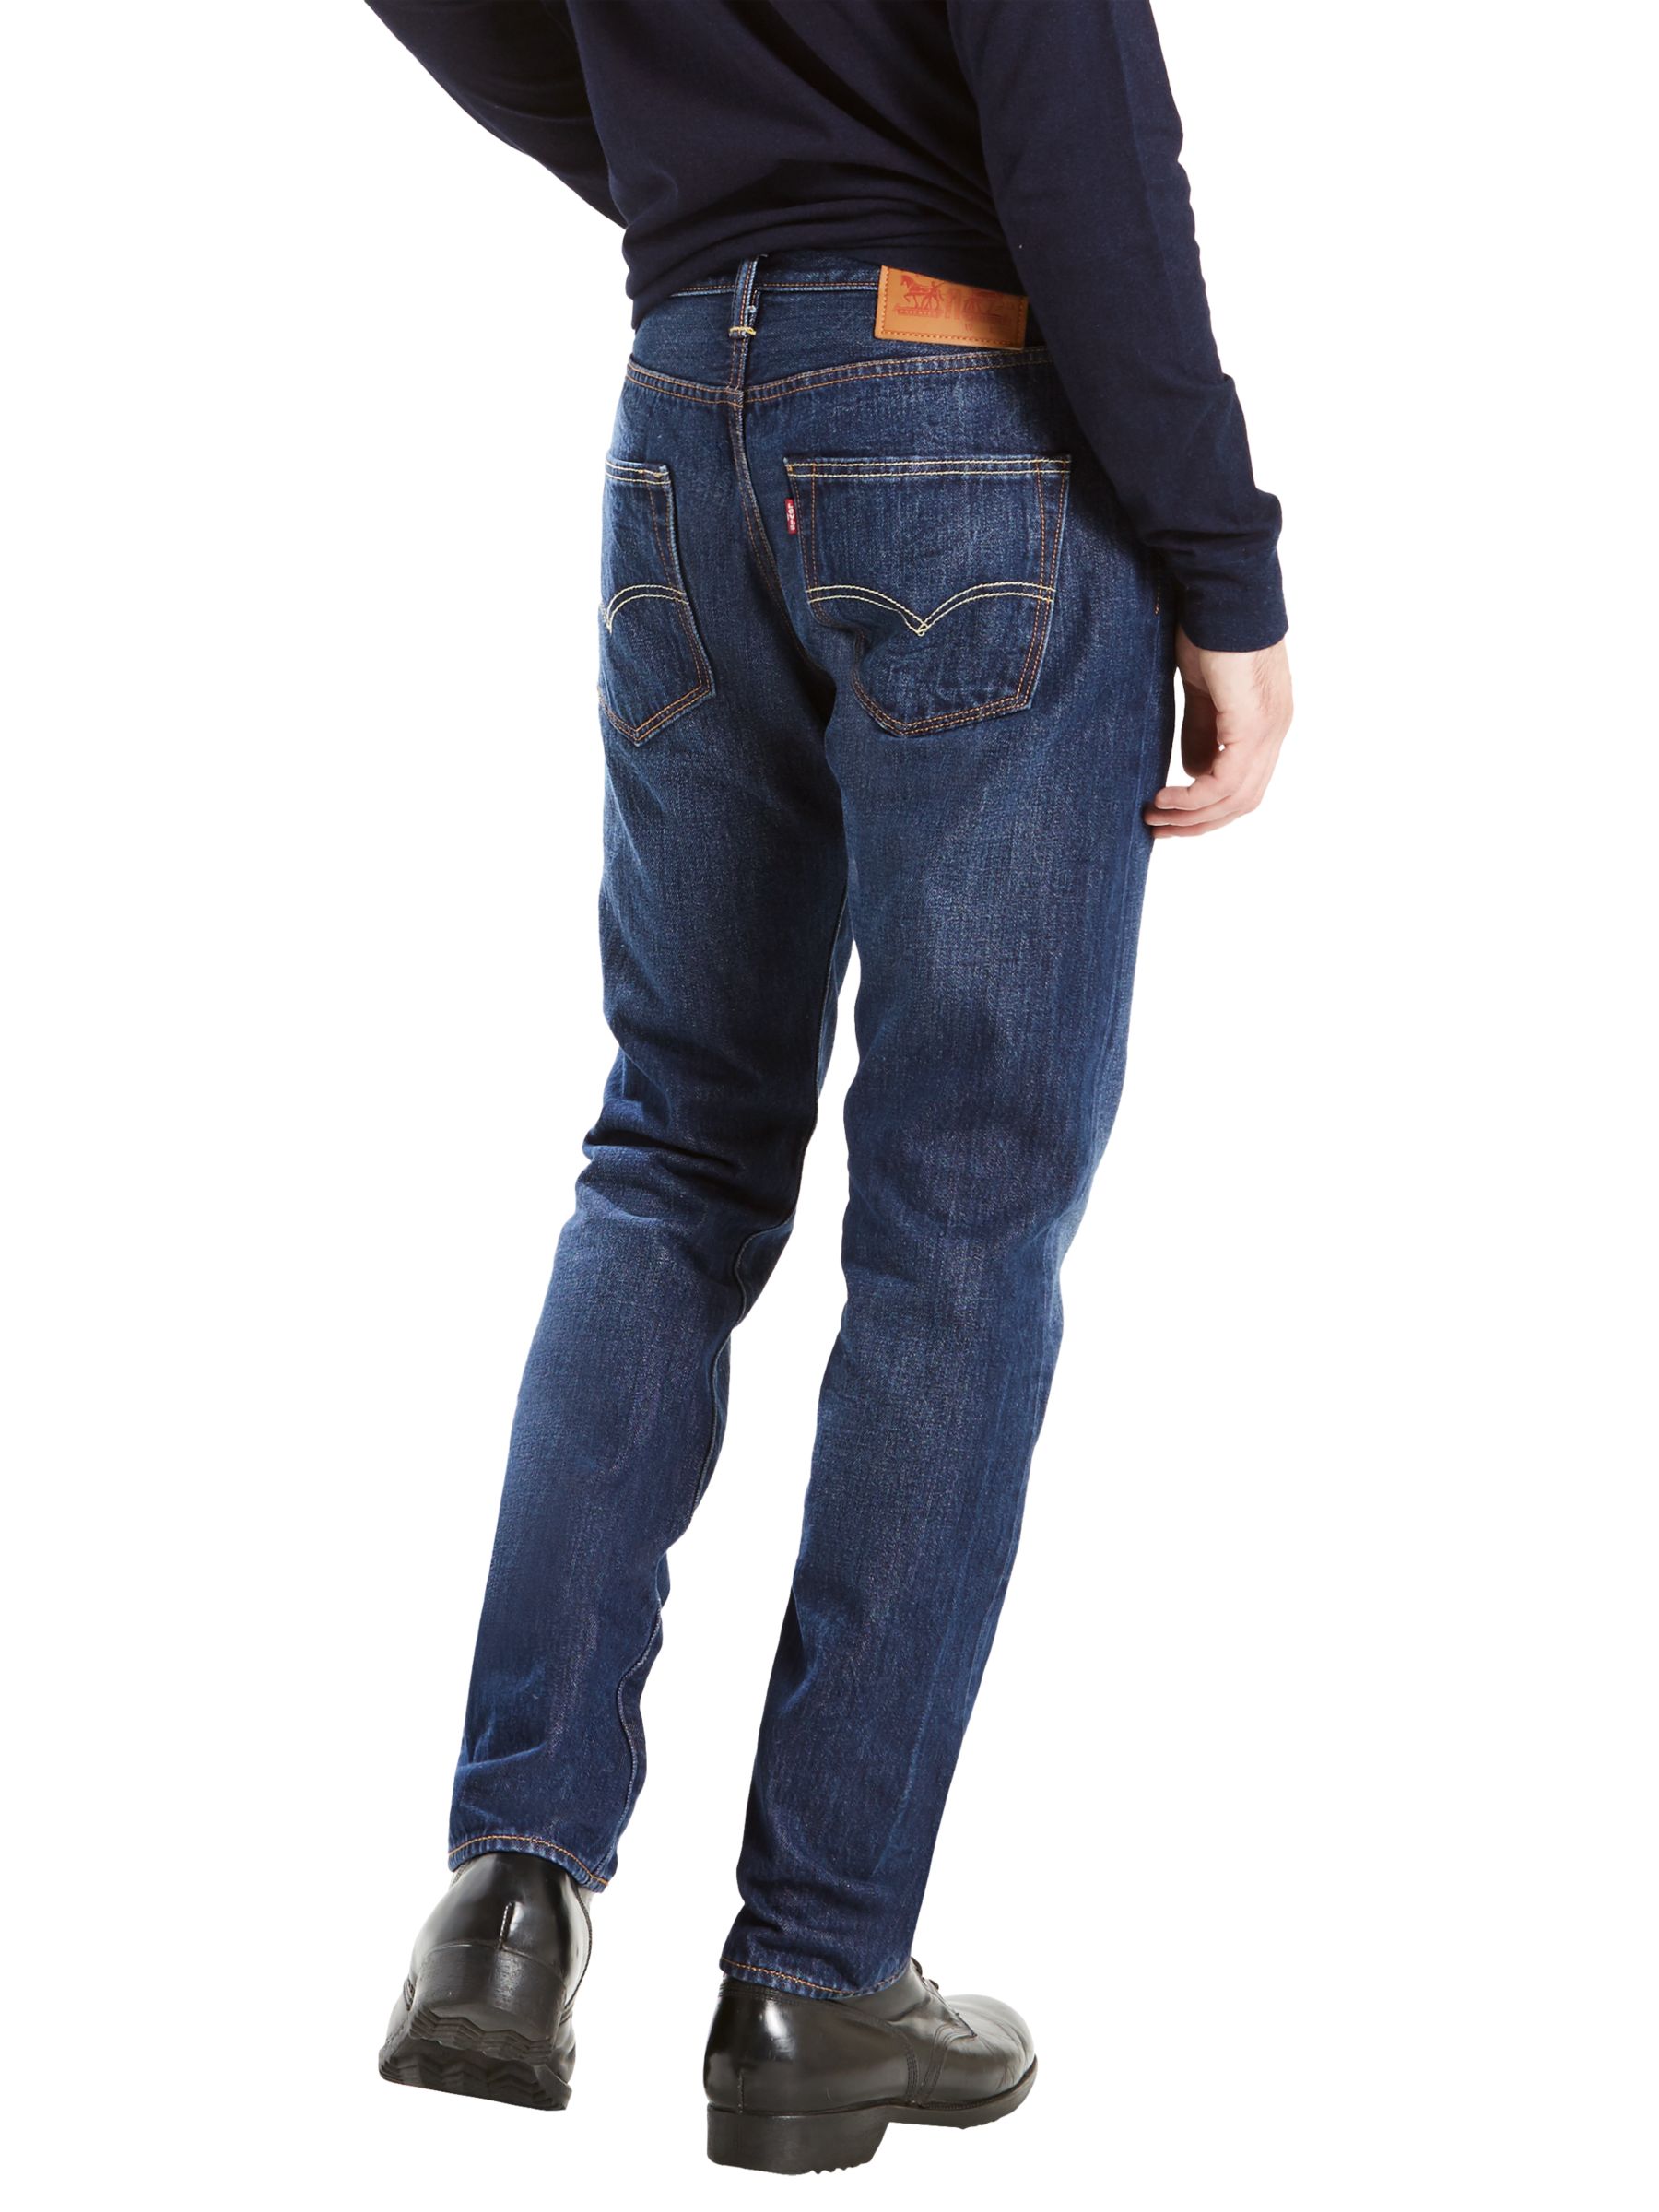 Levi's 501 Original Jeans, Fire Island Warm